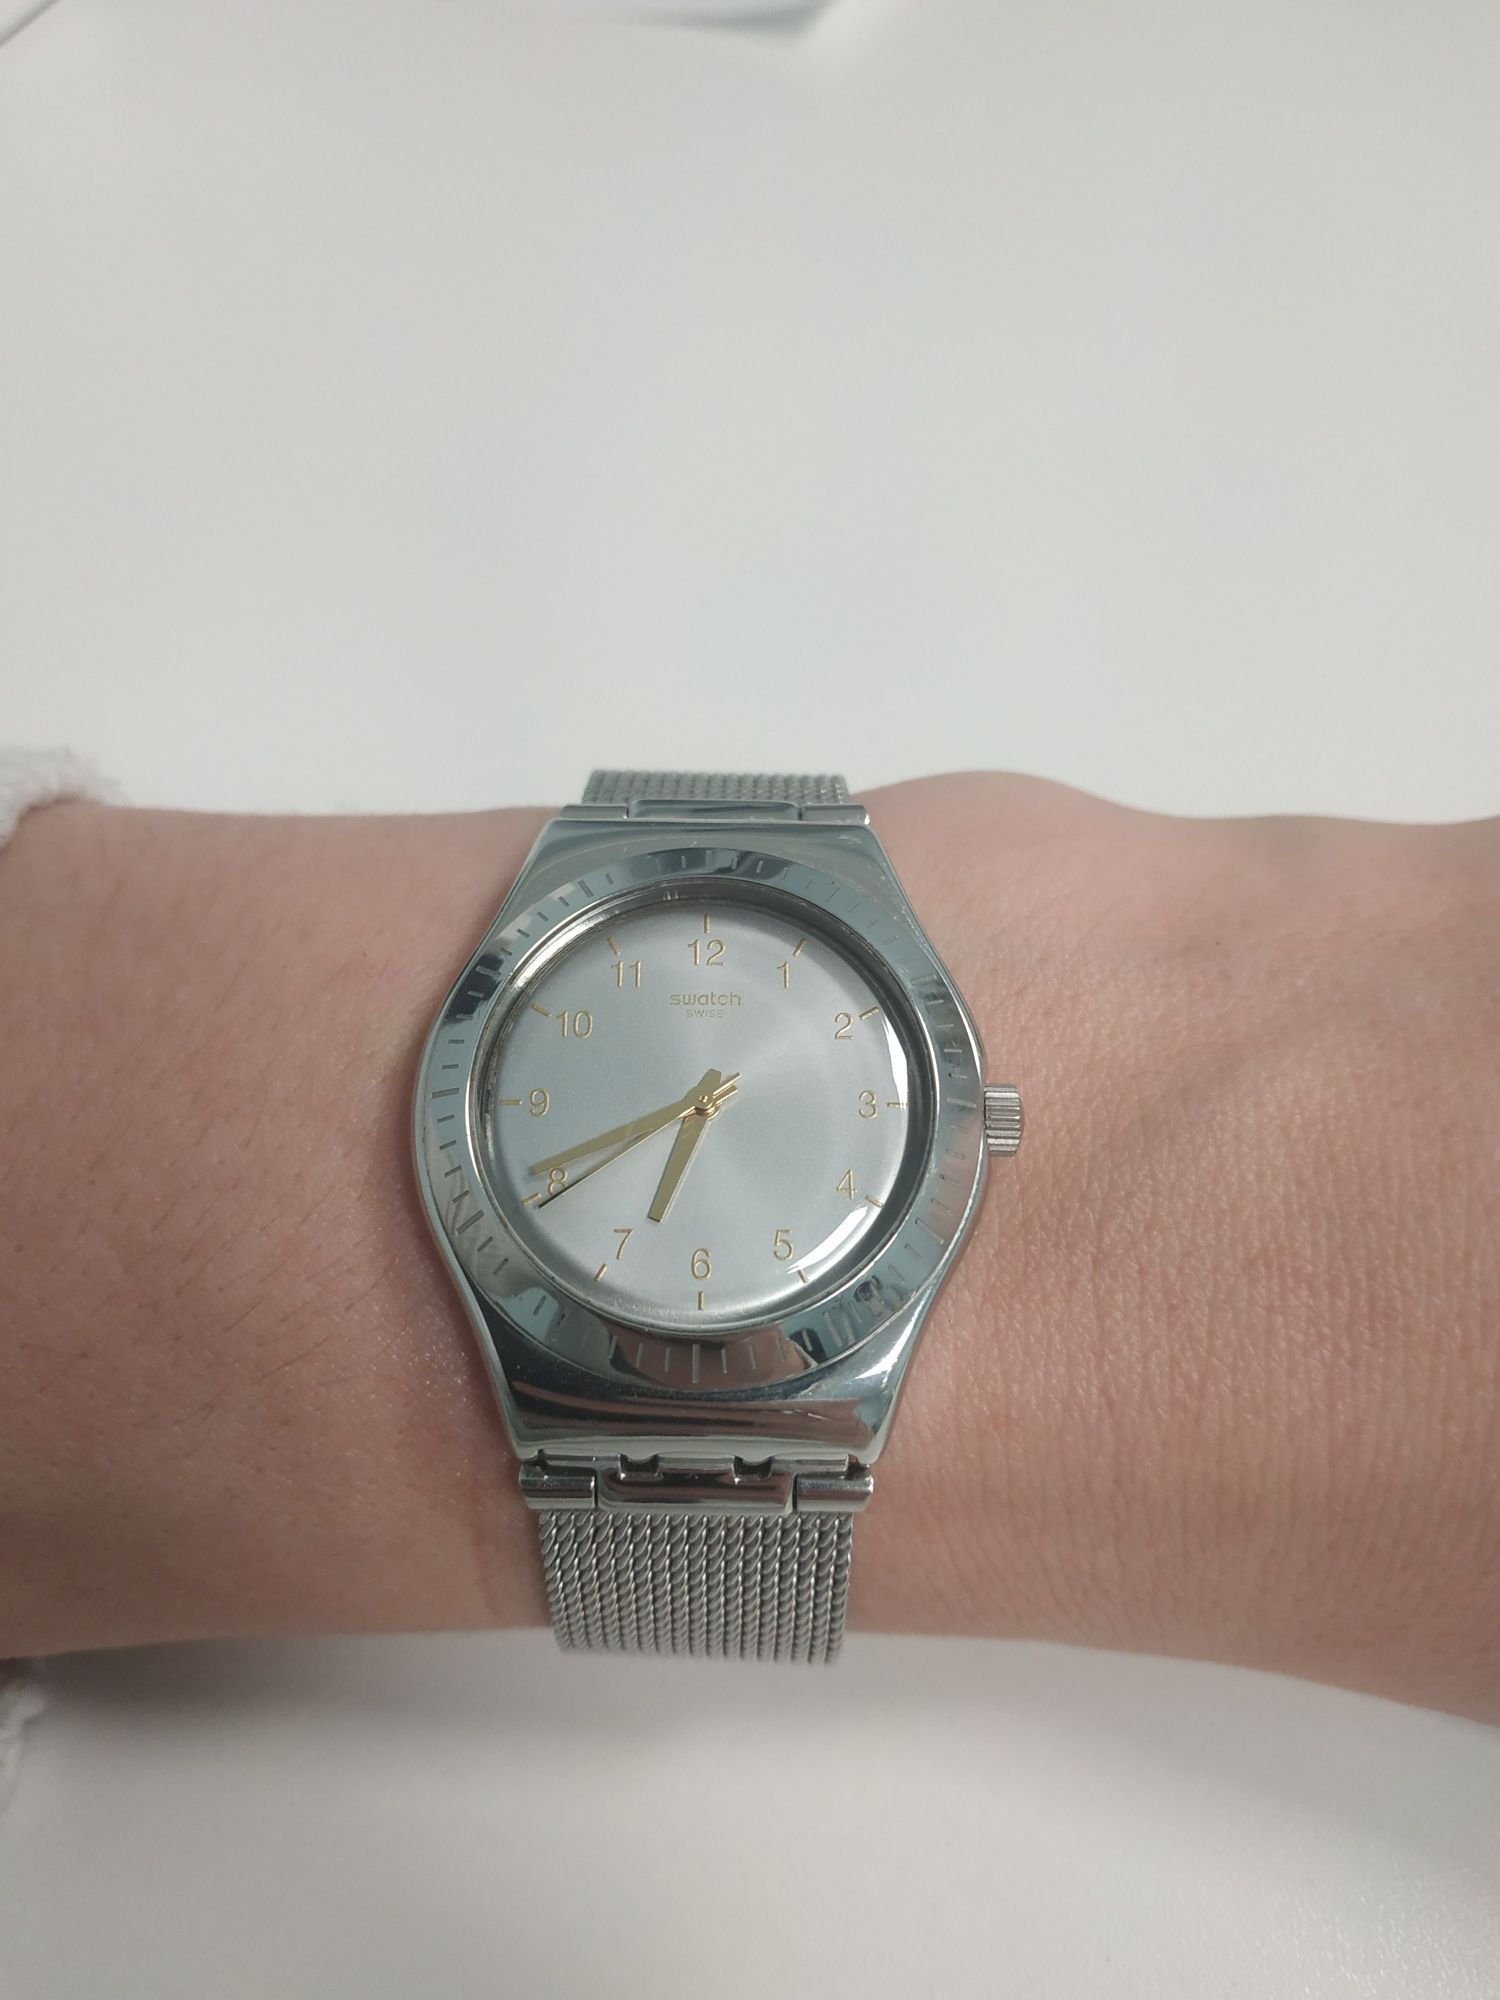 Zegarek swatch irony medium srebrny złote indeksy